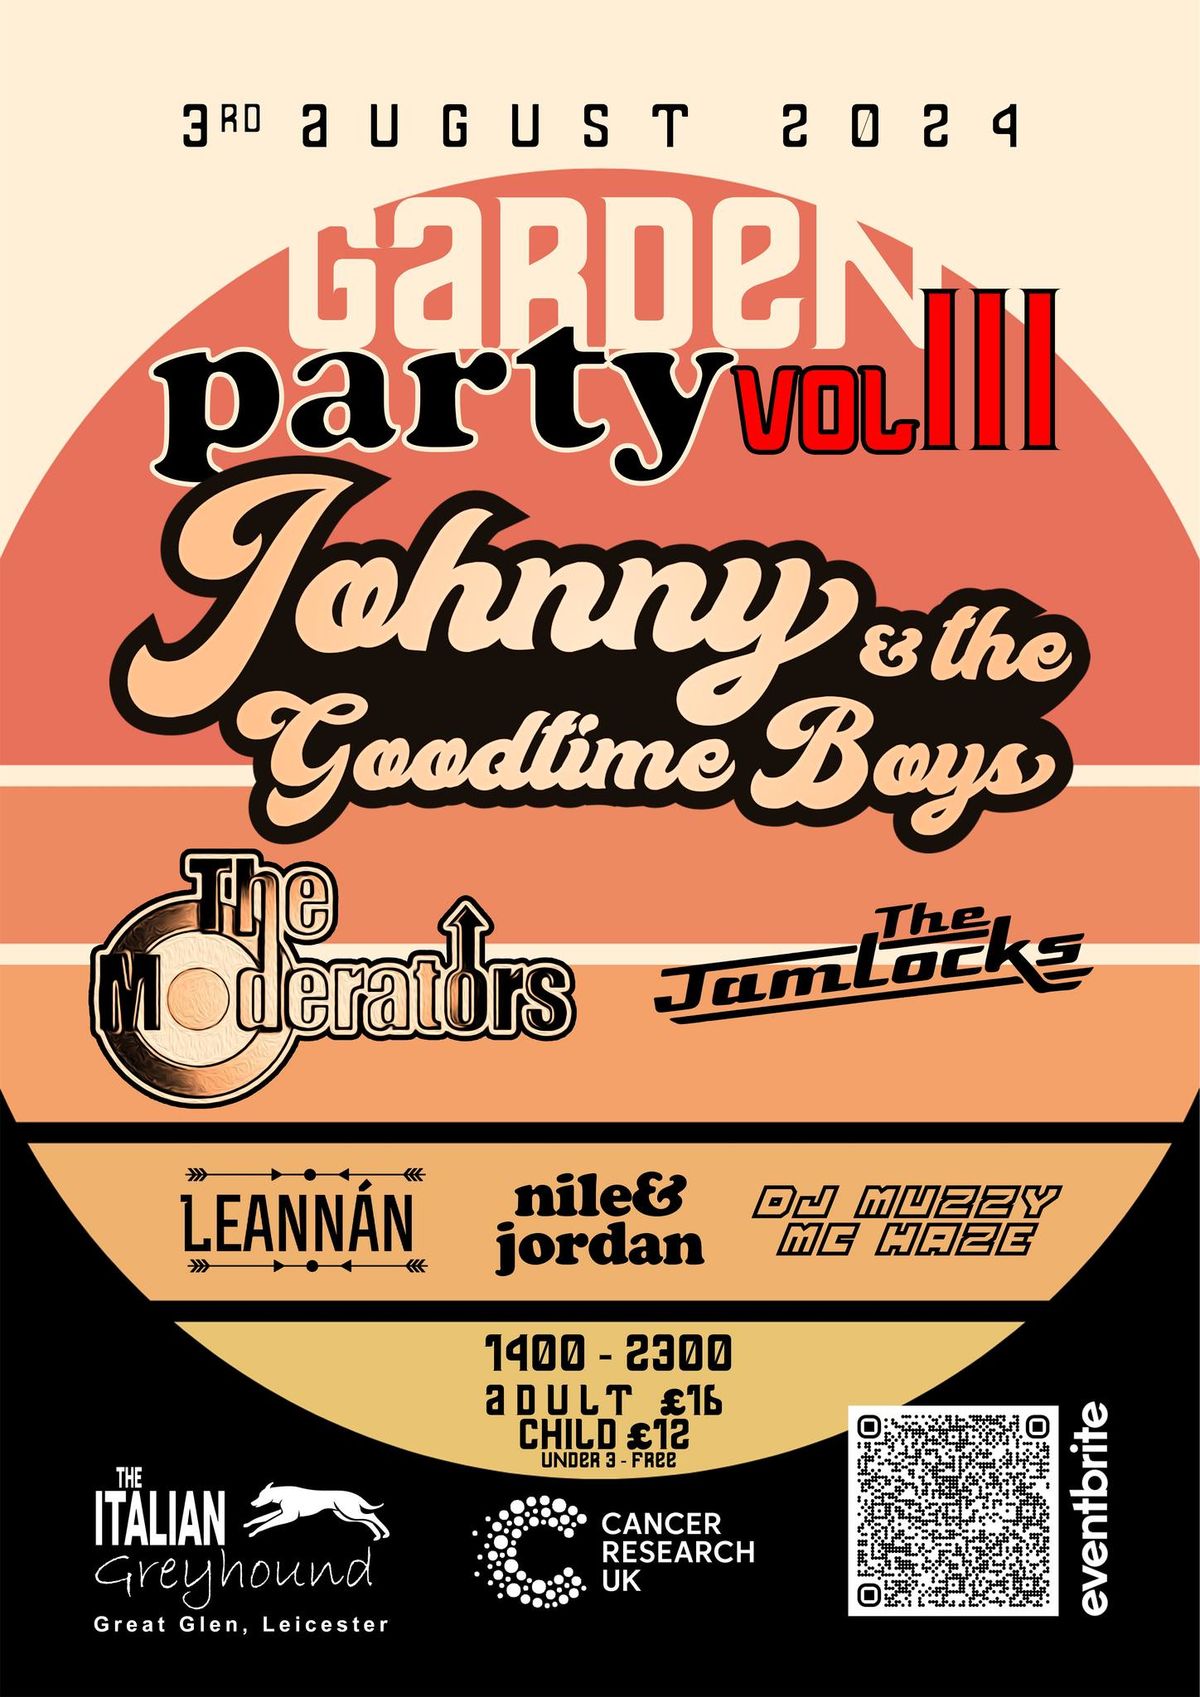 Garden Party III @ The Italian Greyhound with Johnny & The Goodtime Boys